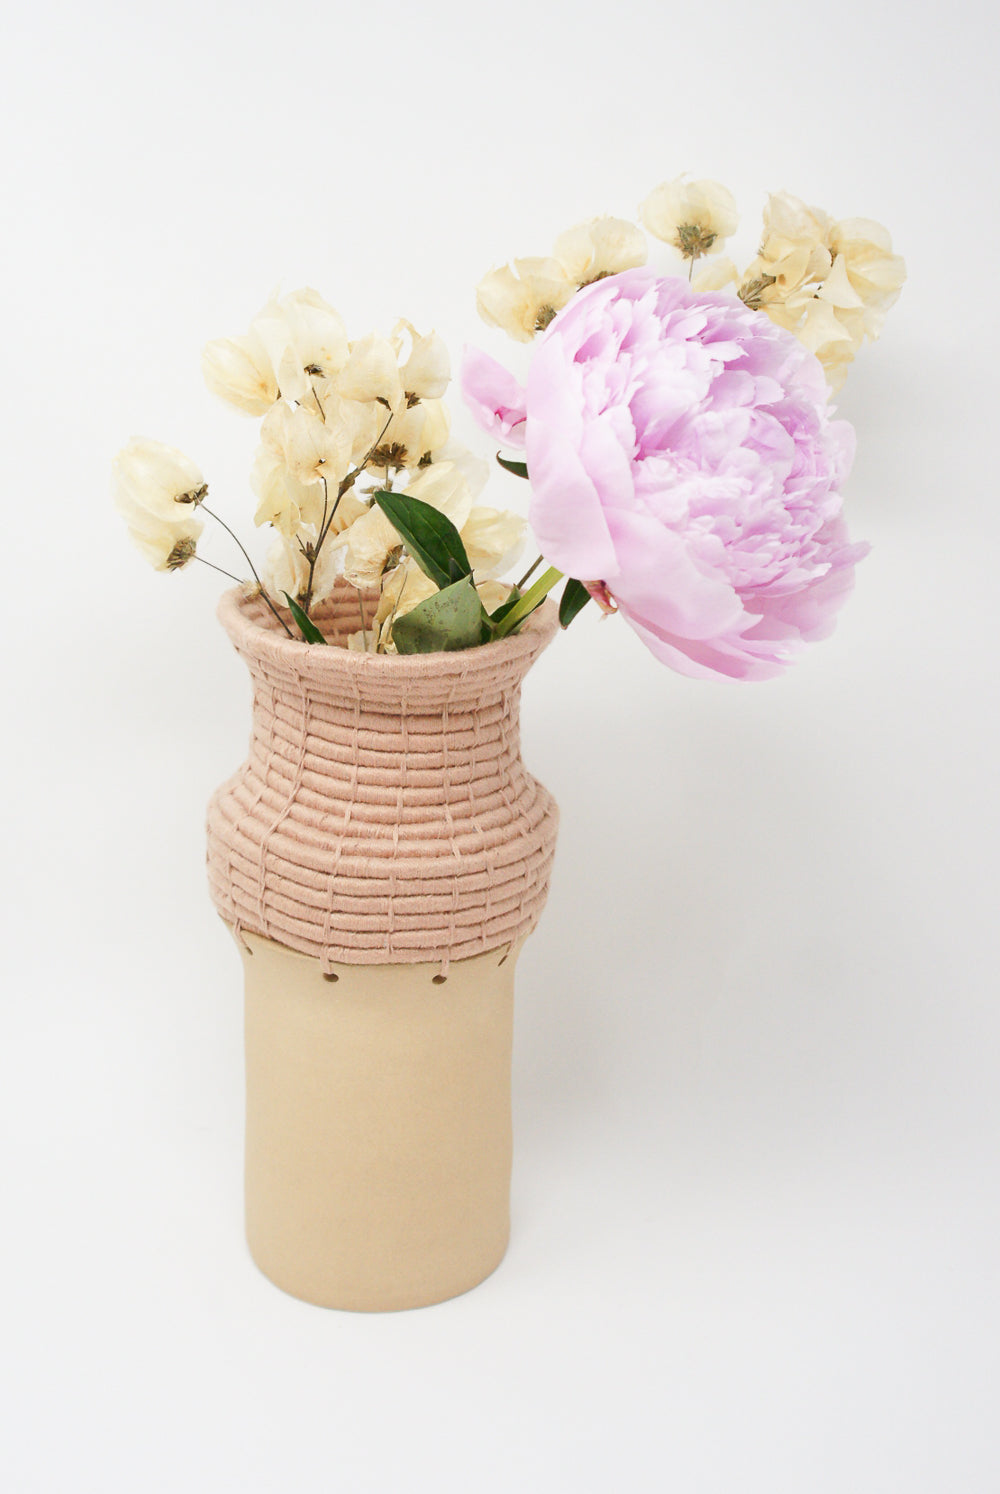 Karen Tinney Vase #731 in Natural/Blush with flowers